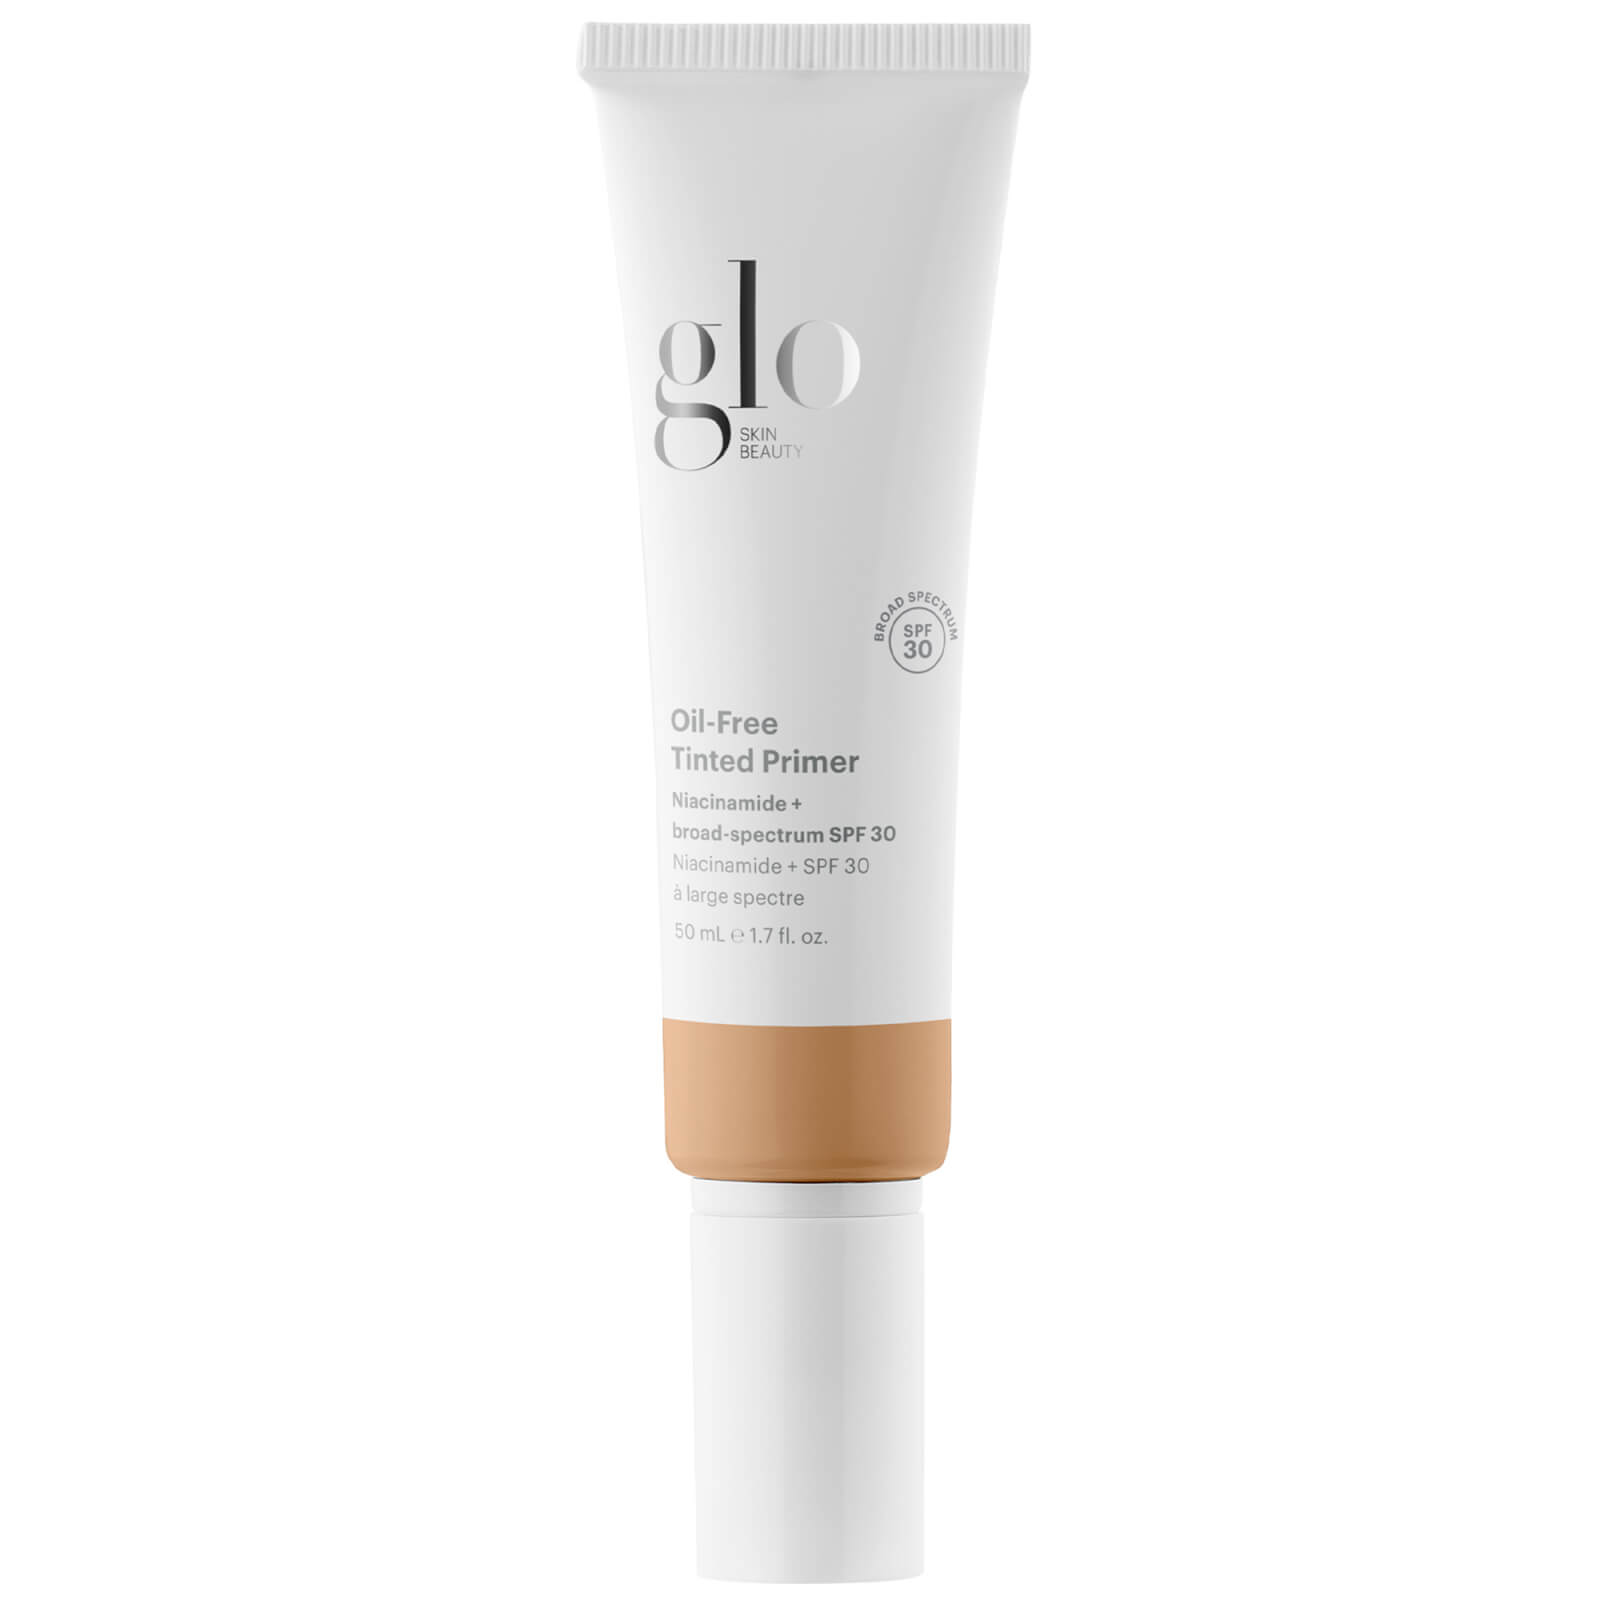 Glo Skin Beauty Oil-free Tinted Primer Spf 30 50ml (various Shades) In Medium